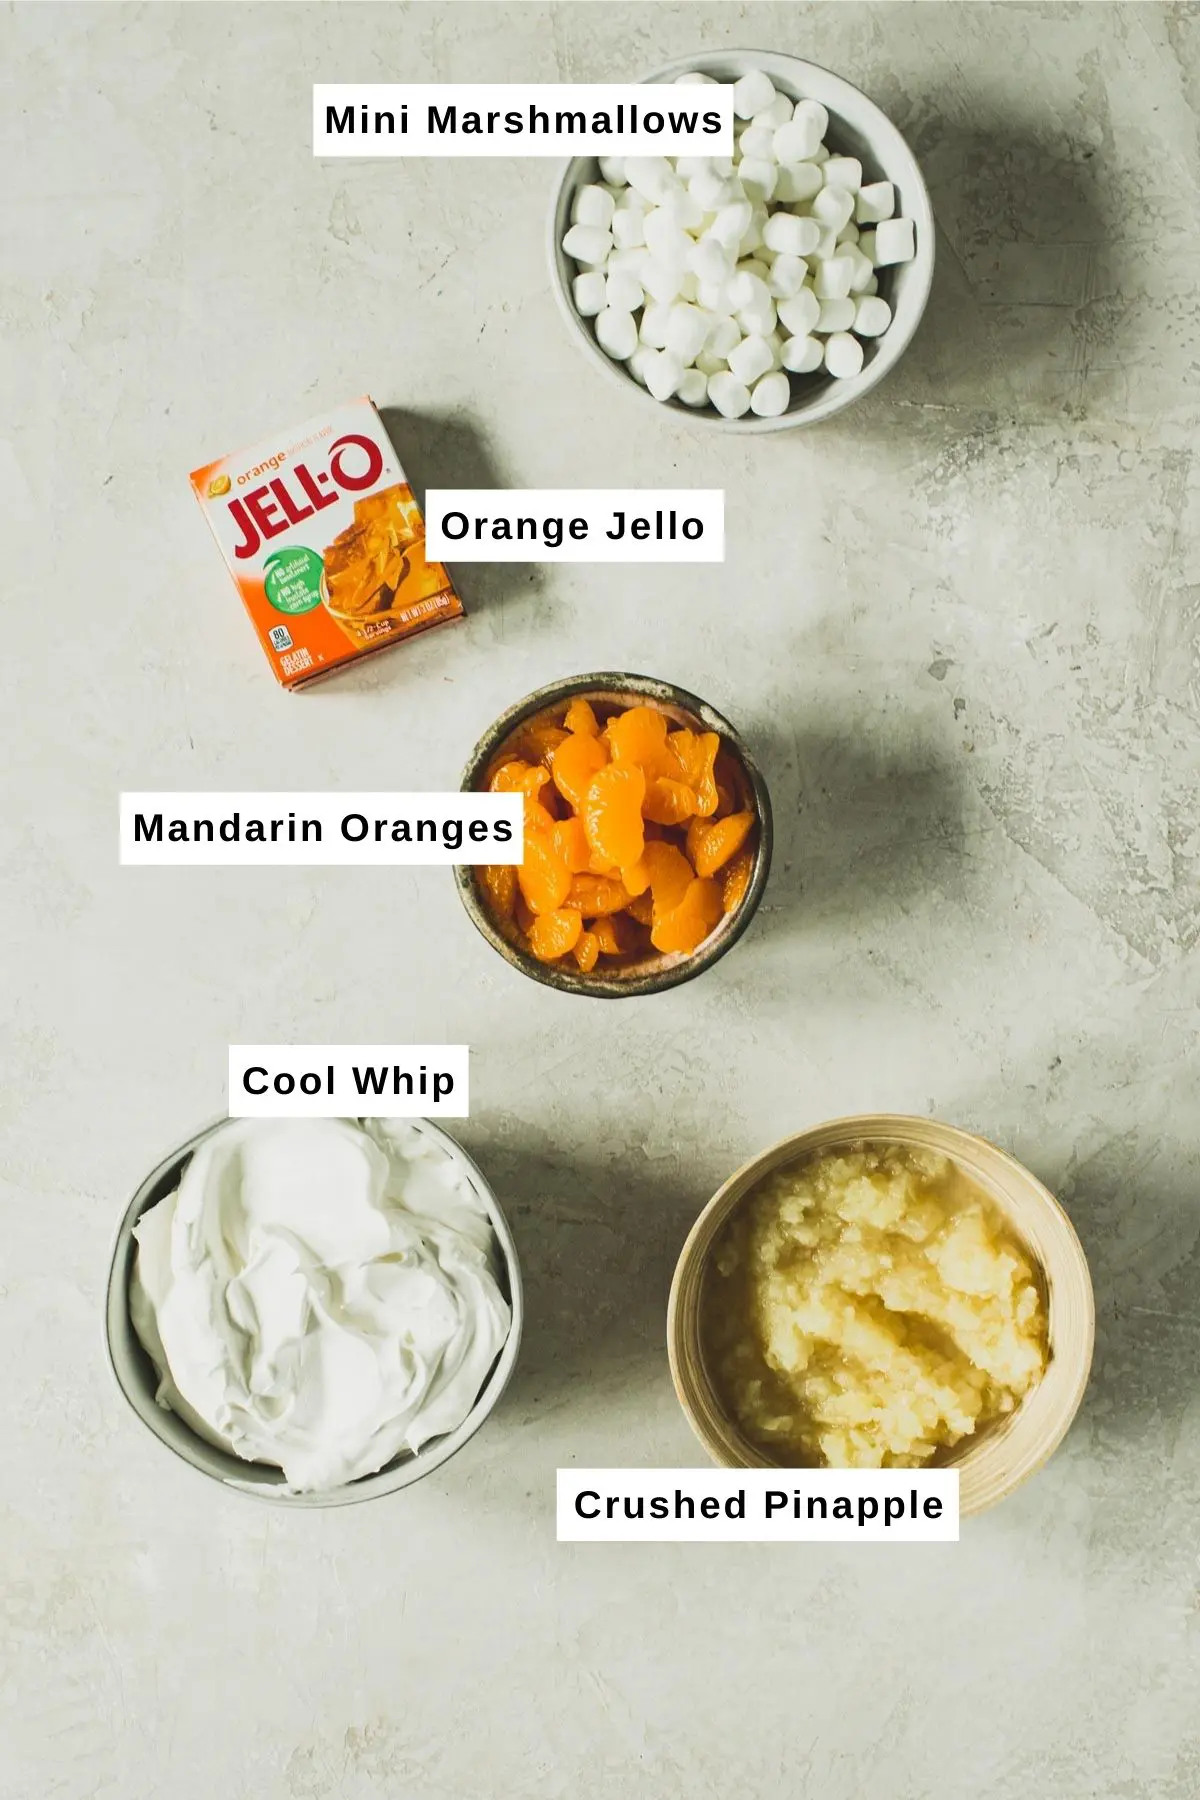 Orange Jello salad ingredients in bowls.